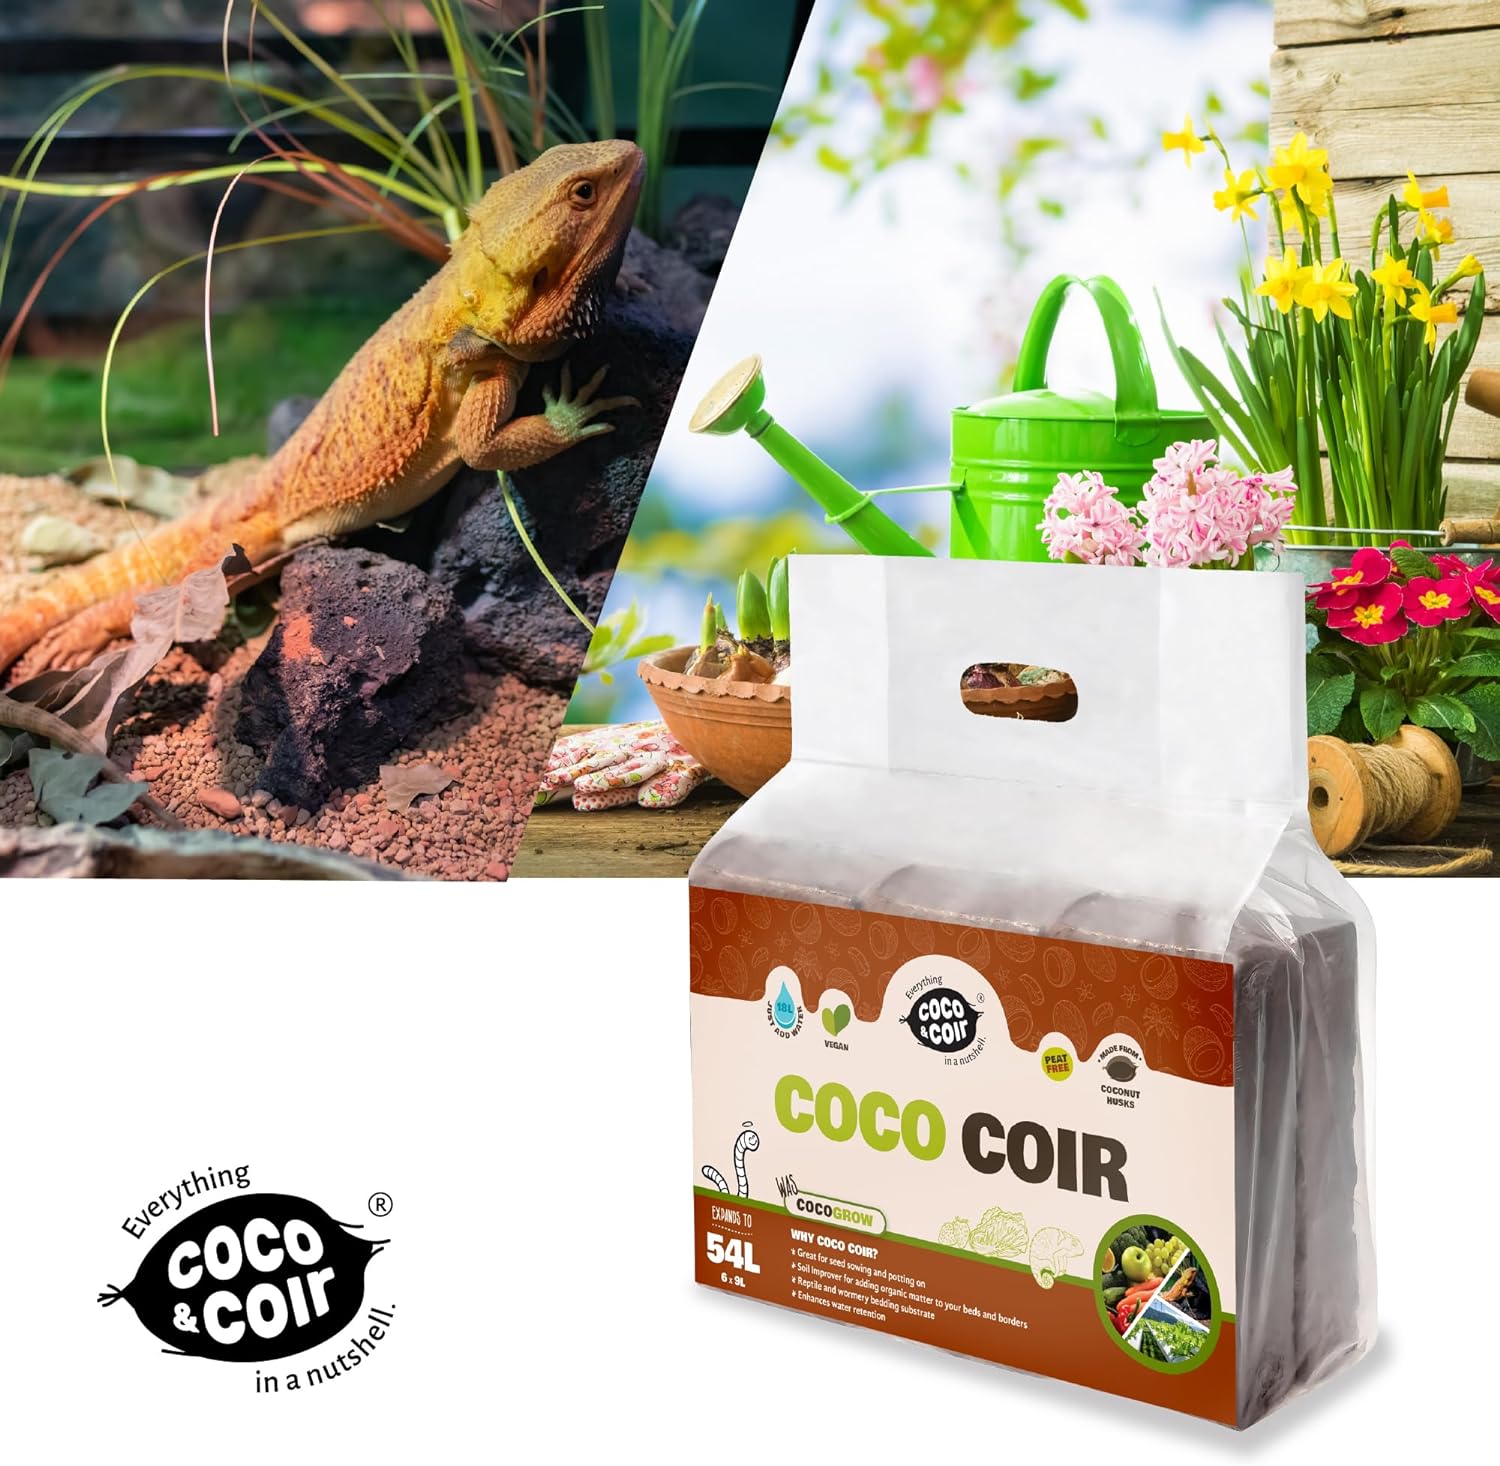 Coir Compost - Coco Grow 54L